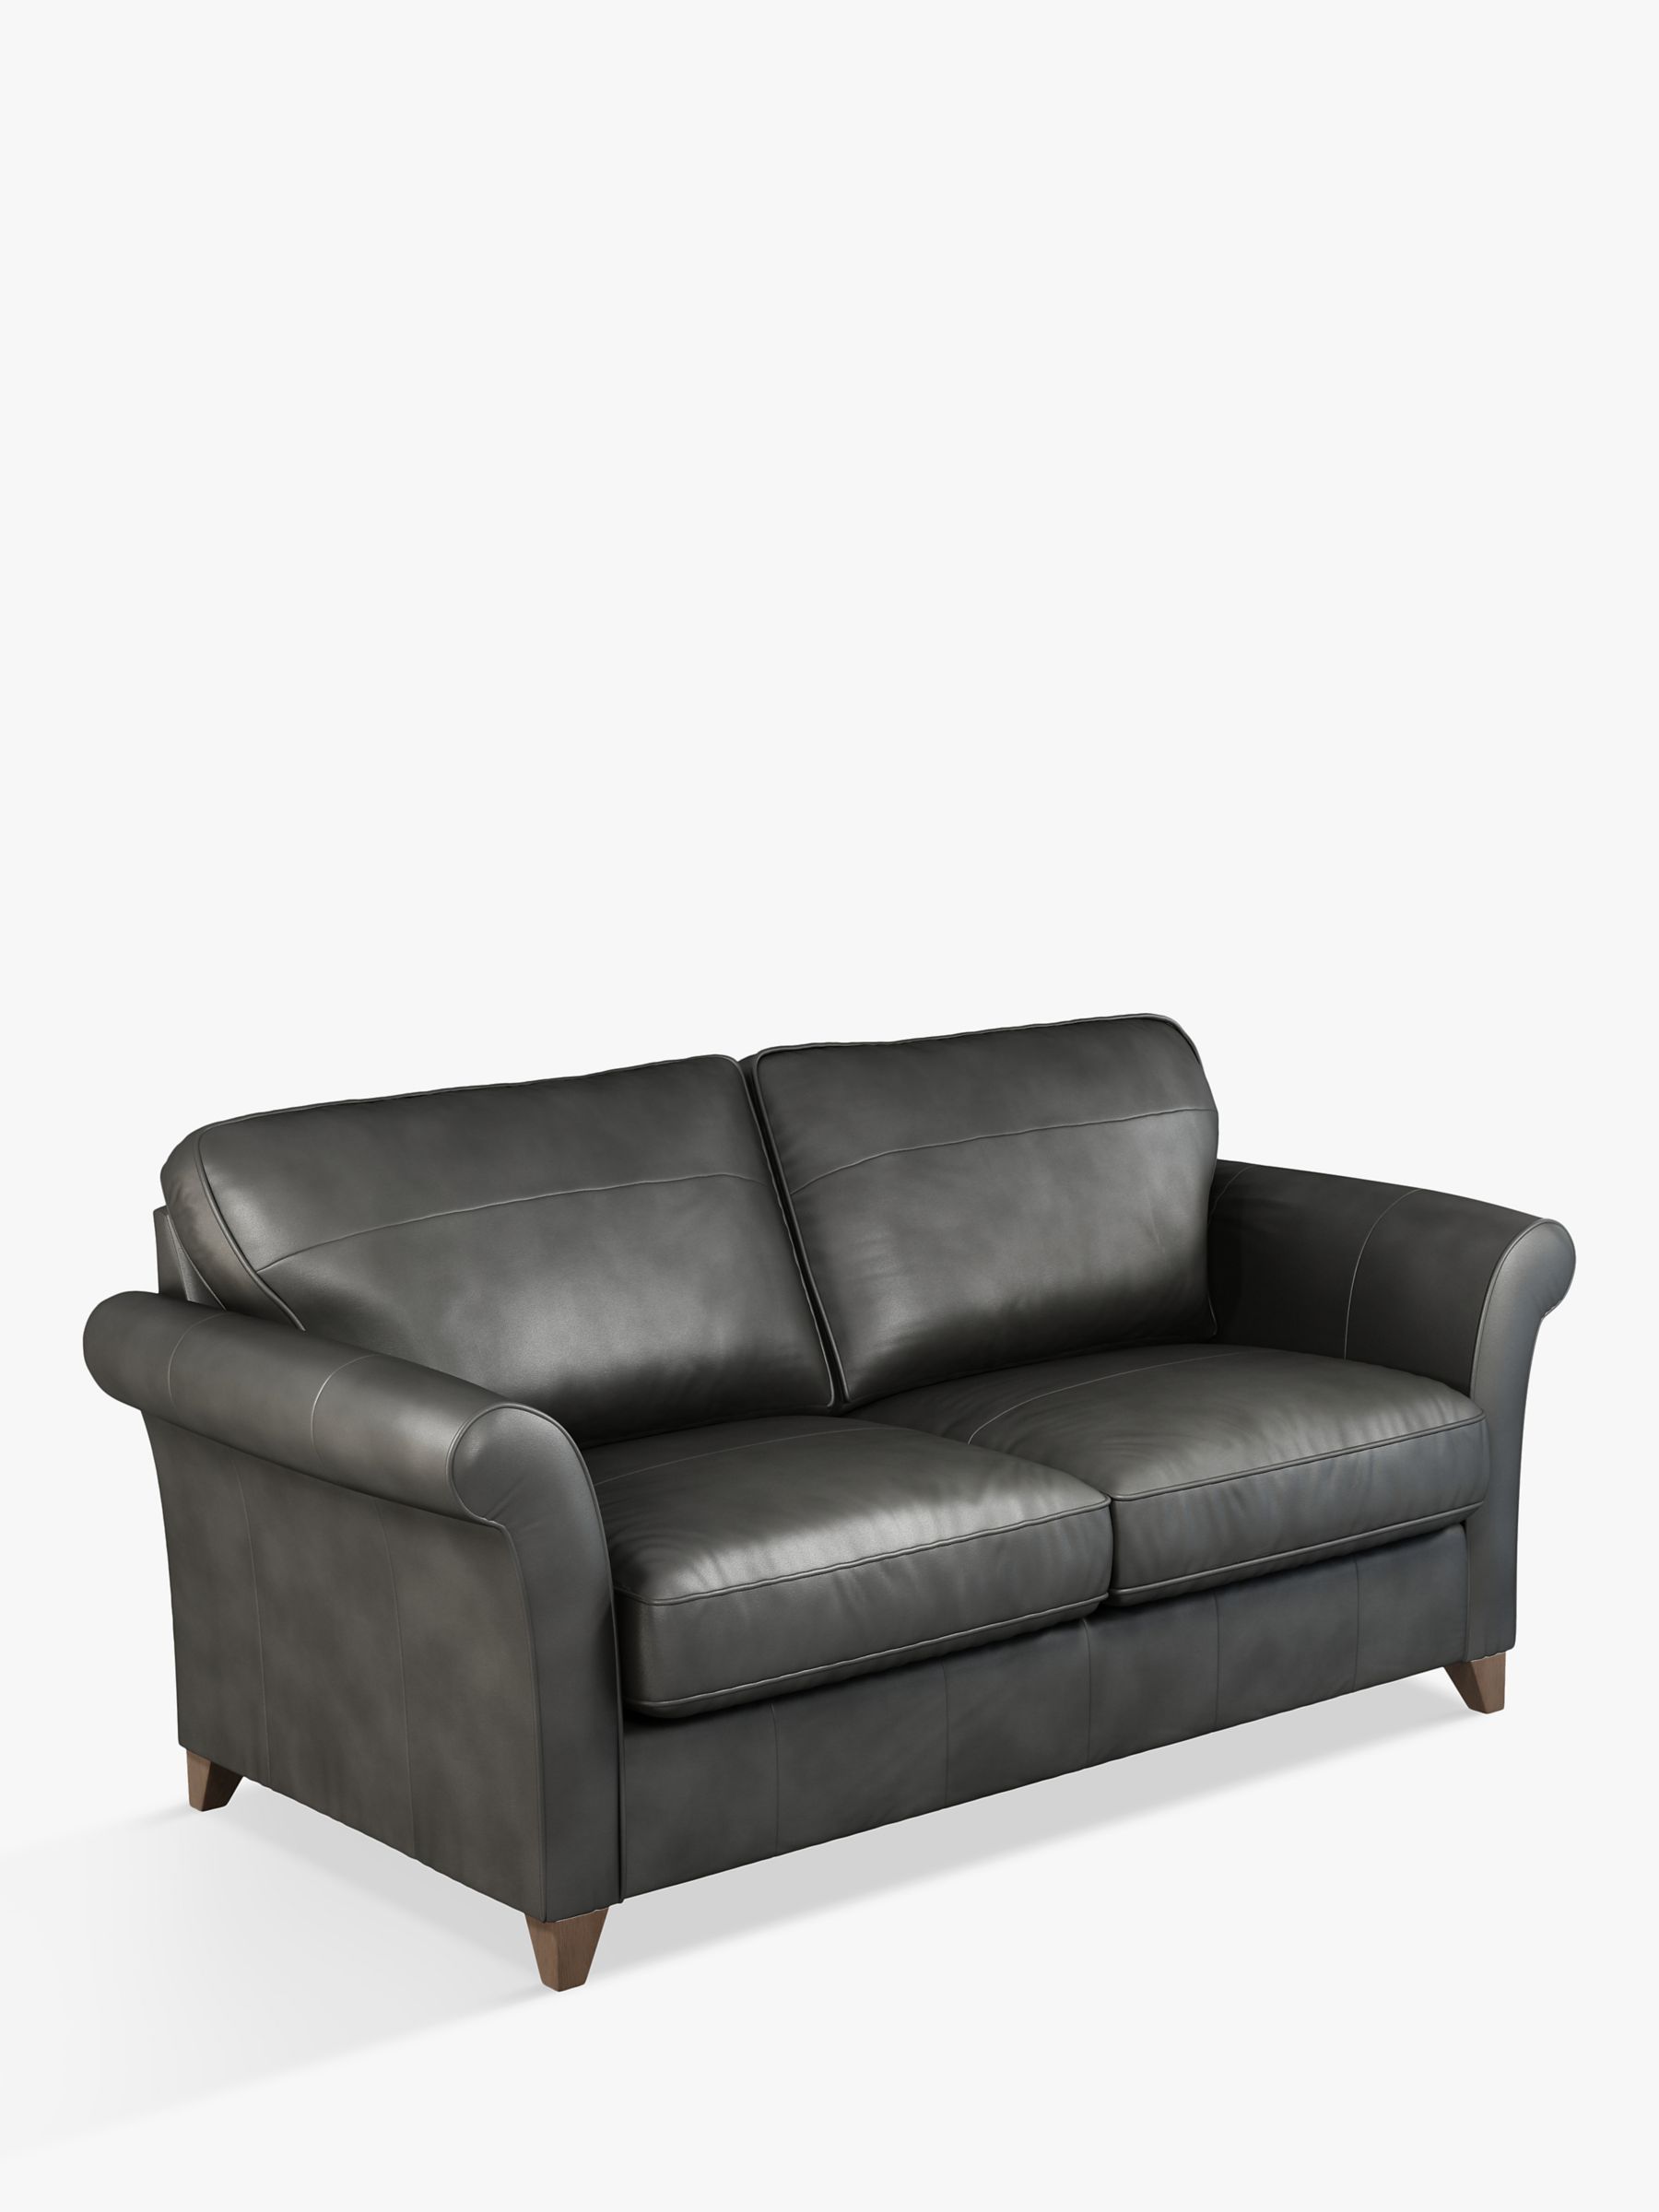 John Lewis Charlotte Grand 4 Seater Leather Sofa, Dark Leg